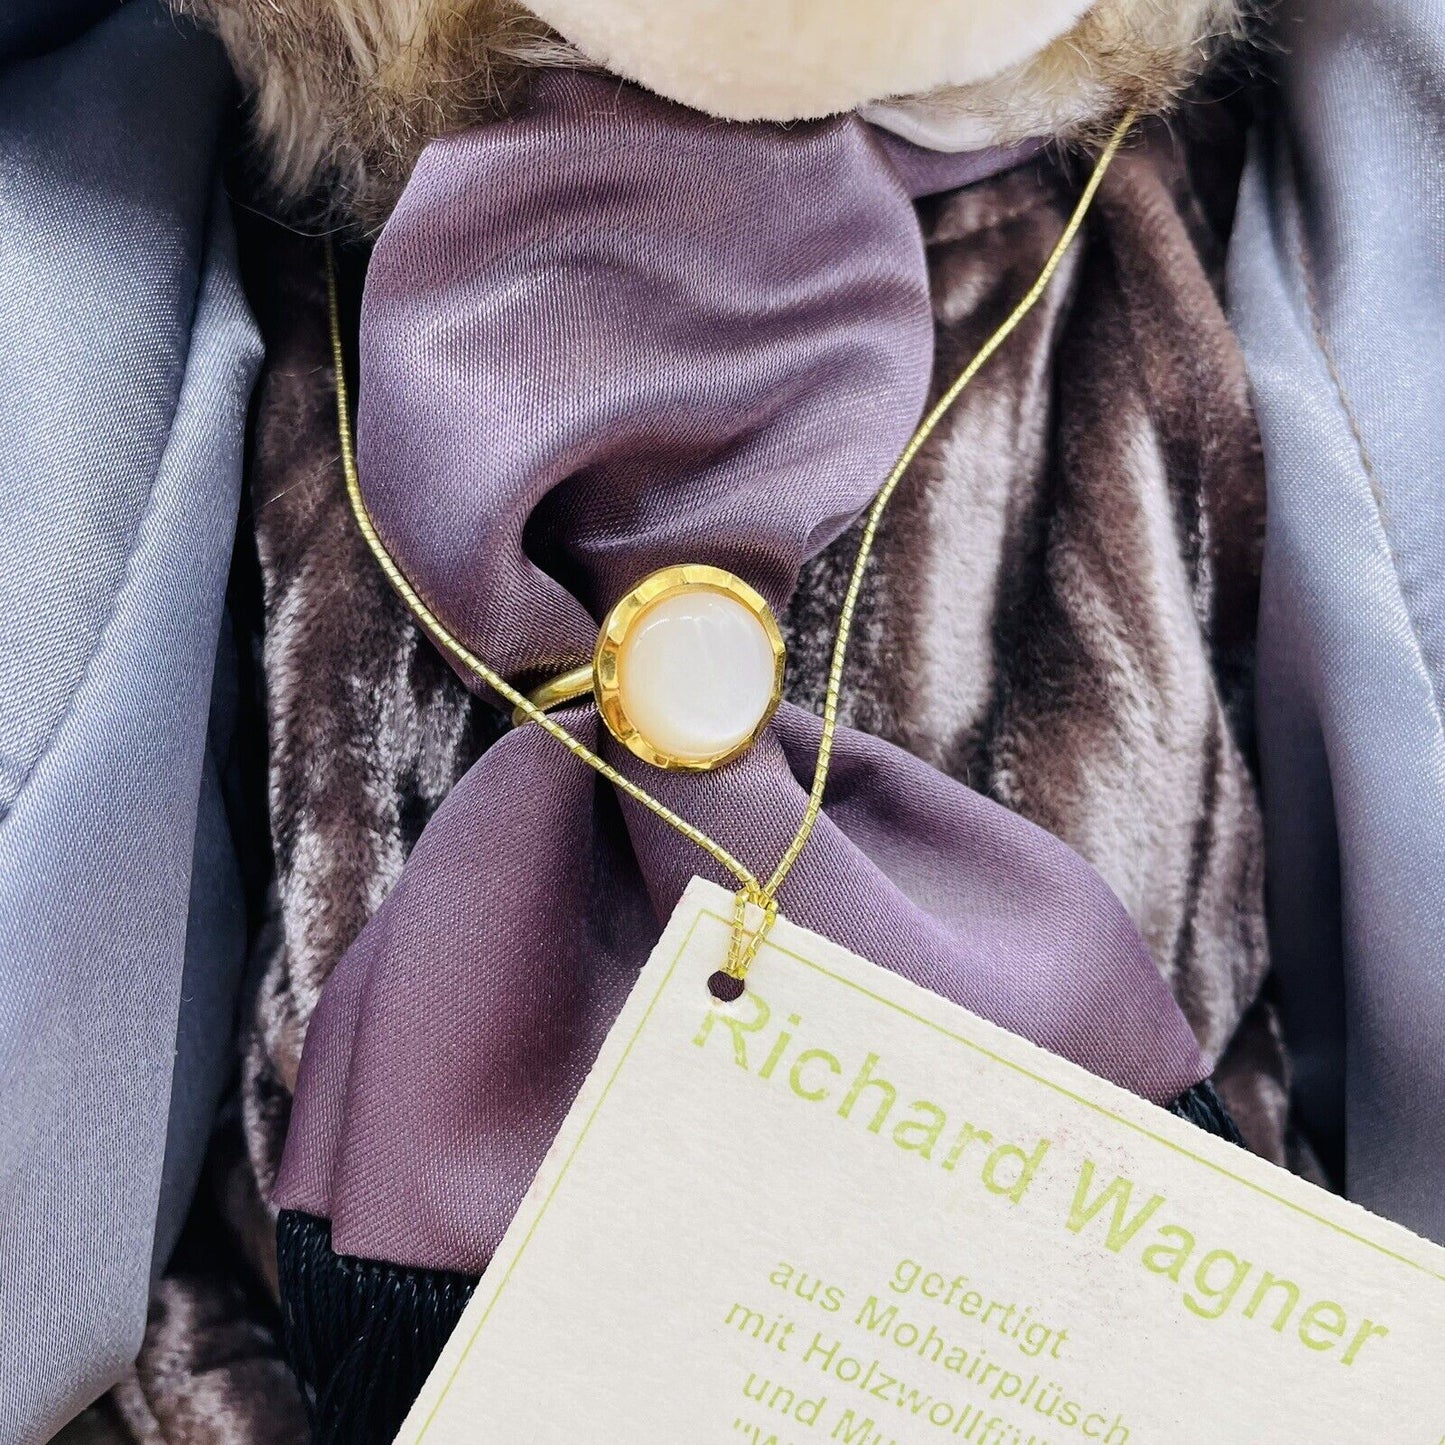 Hermann Coburg Teddybär Richard Wagner limitiert 500 40cm Mohair